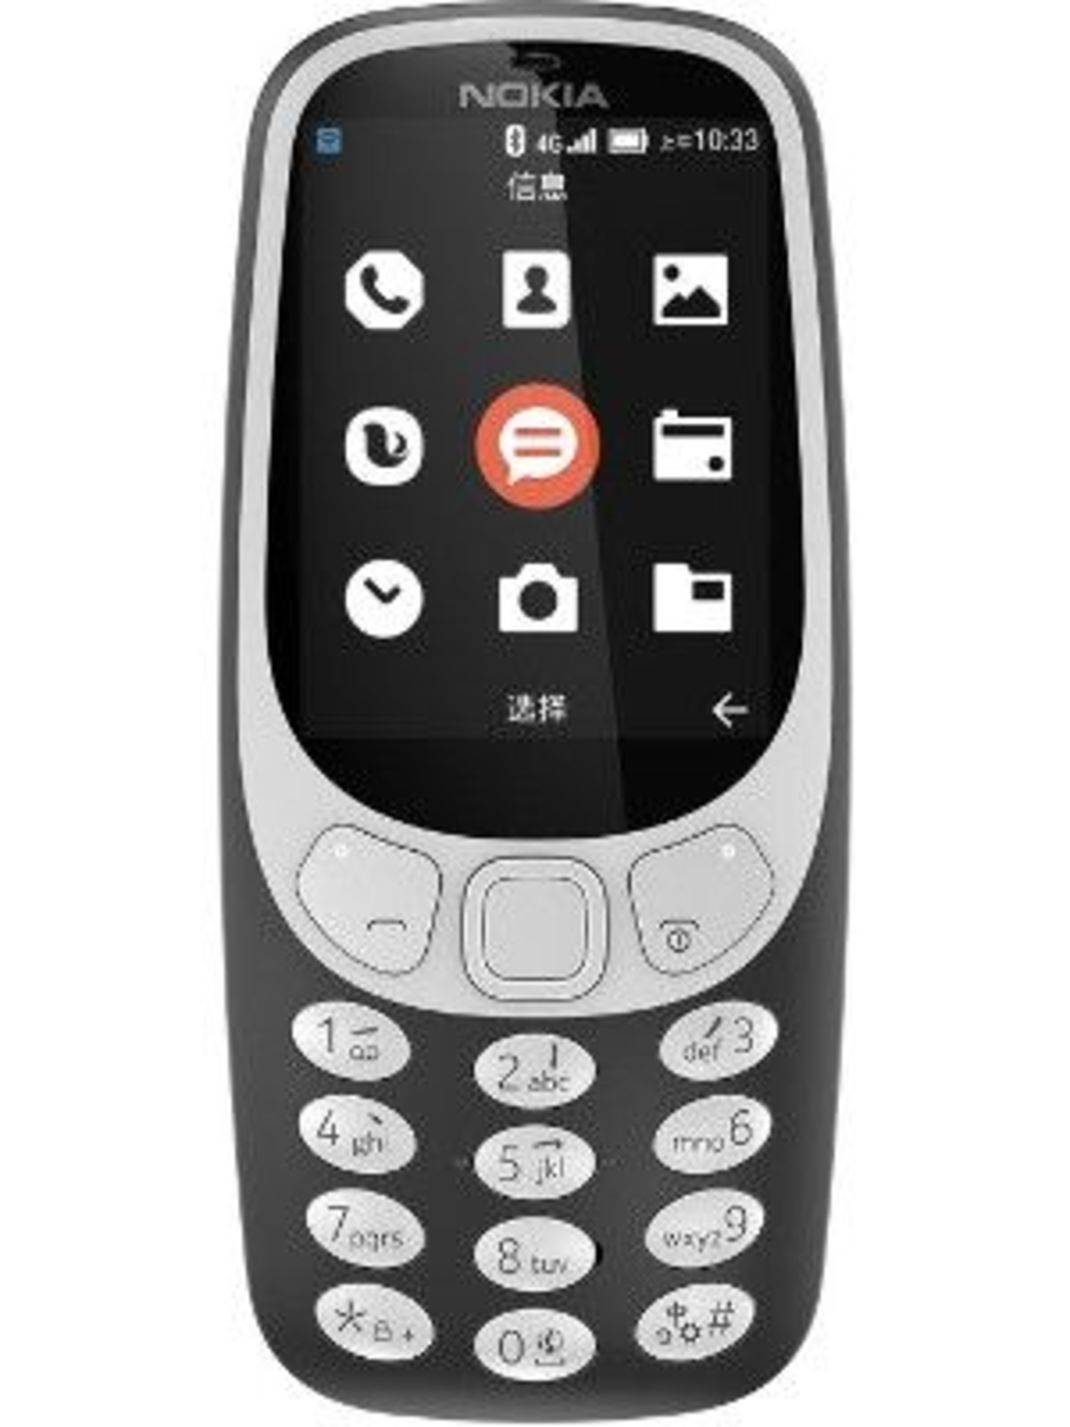 Compare Nokia 3310 4g Vs Nokia 3310 New Price Specs Review Gadgets Now